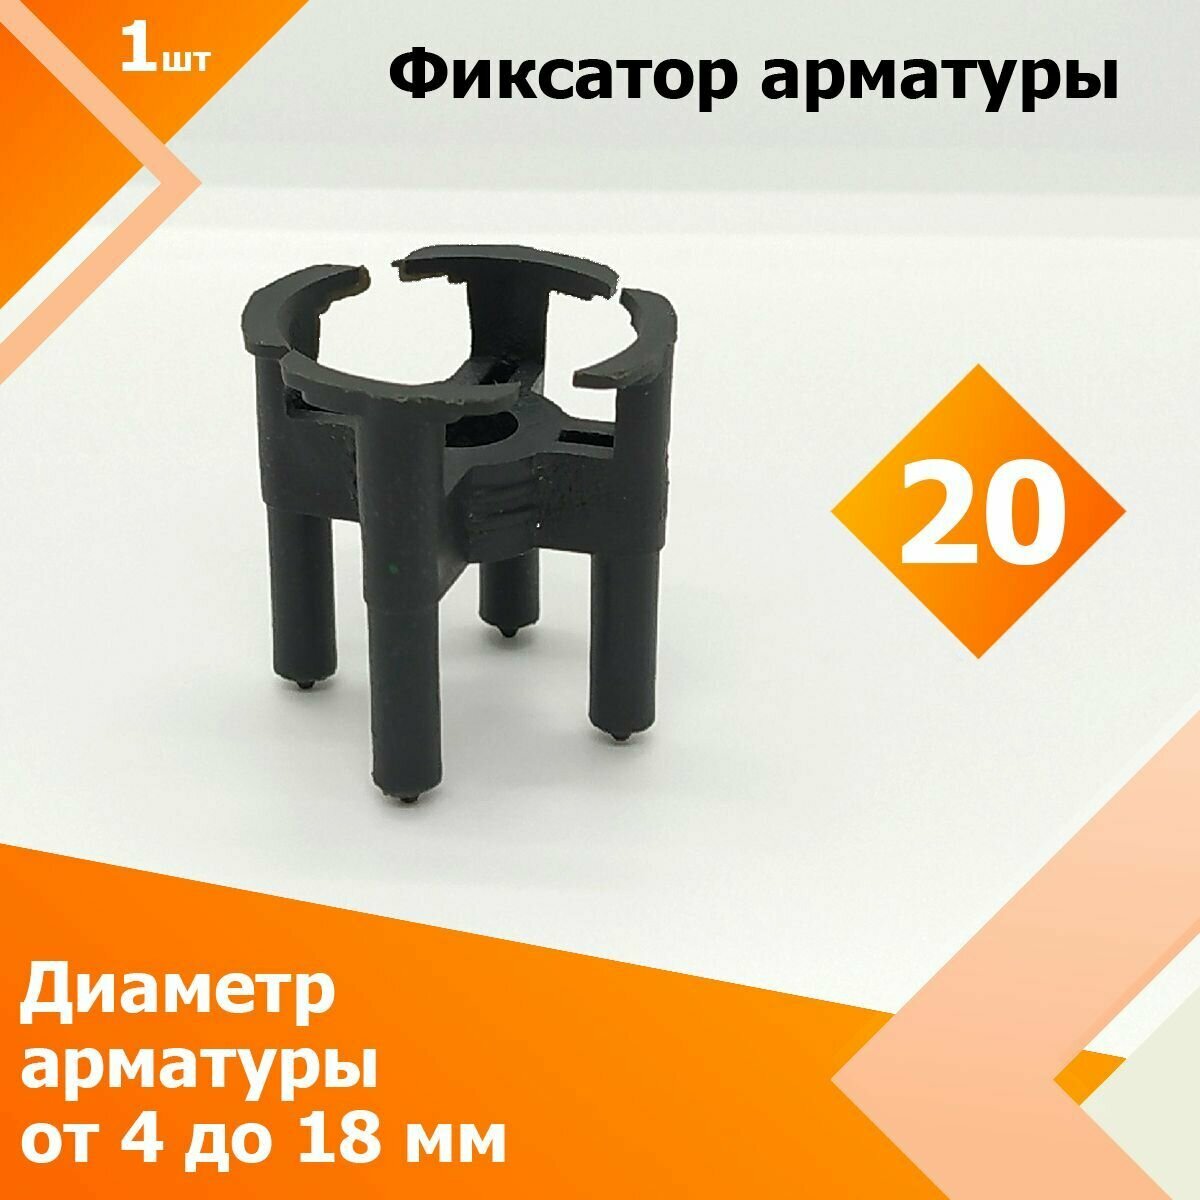 Фиксатор арматуры "Стульчик" 20 мм (1 шт.) (Диаметр арматуры от 4 до 18 мм)